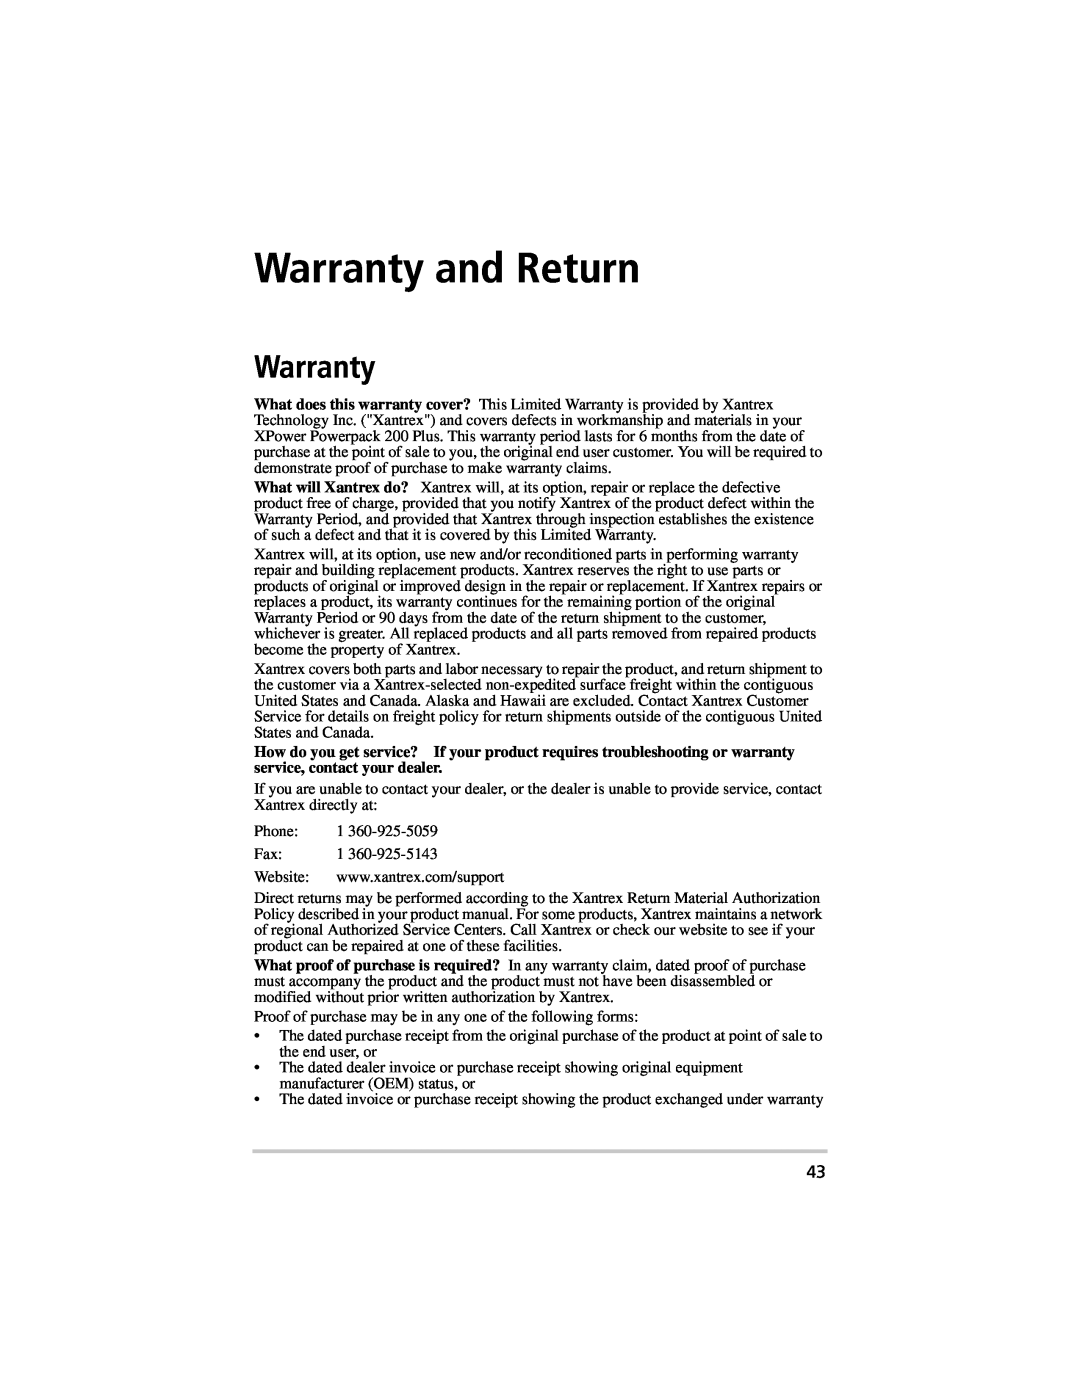 Xantrex Technology 400, 800 manual Warranty and Return 